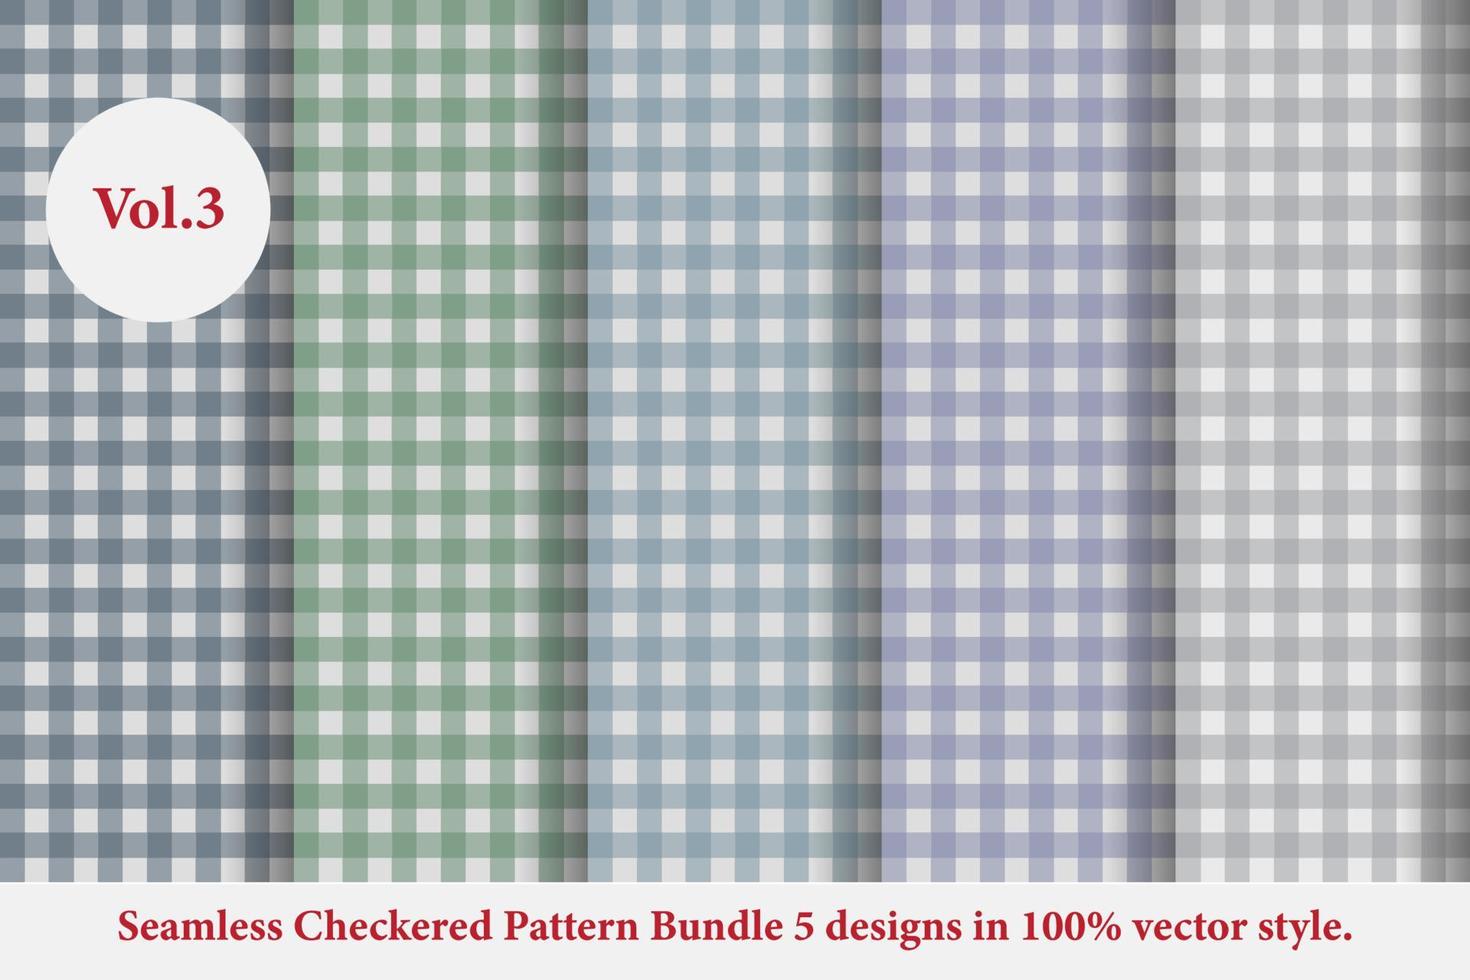 klassieke geruite patroon argyle vector, dat is tartan, gingangpatroon, tartan stof textuur in retro stijl, gekleurd vector